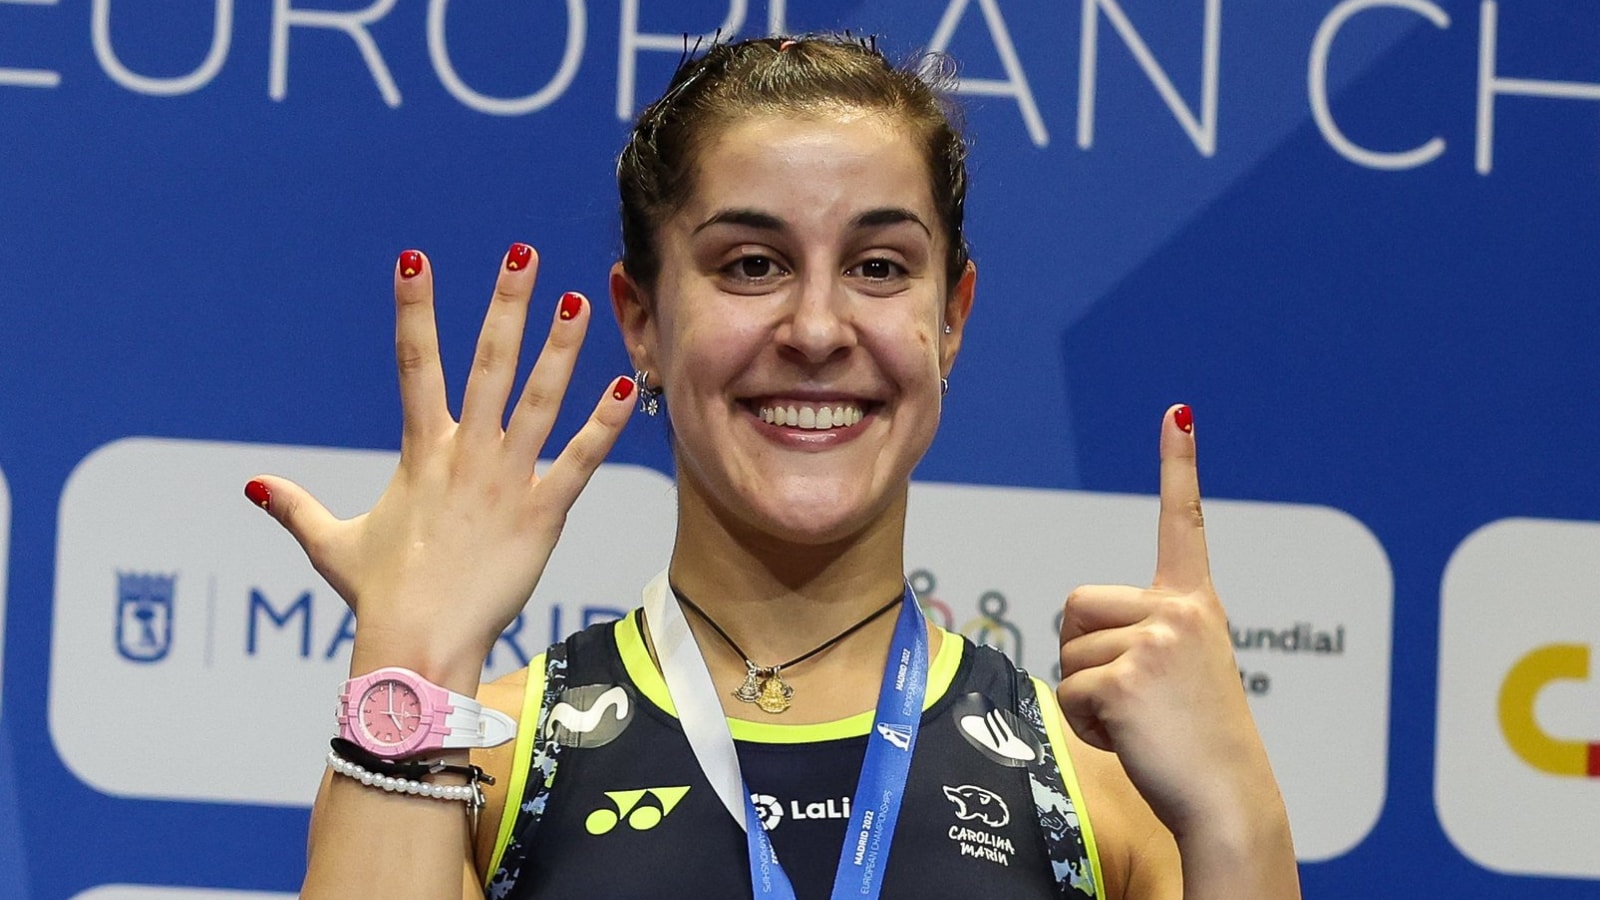 Carolina Marin Wins European Badminton Championships after Lengthy Injury Layoff